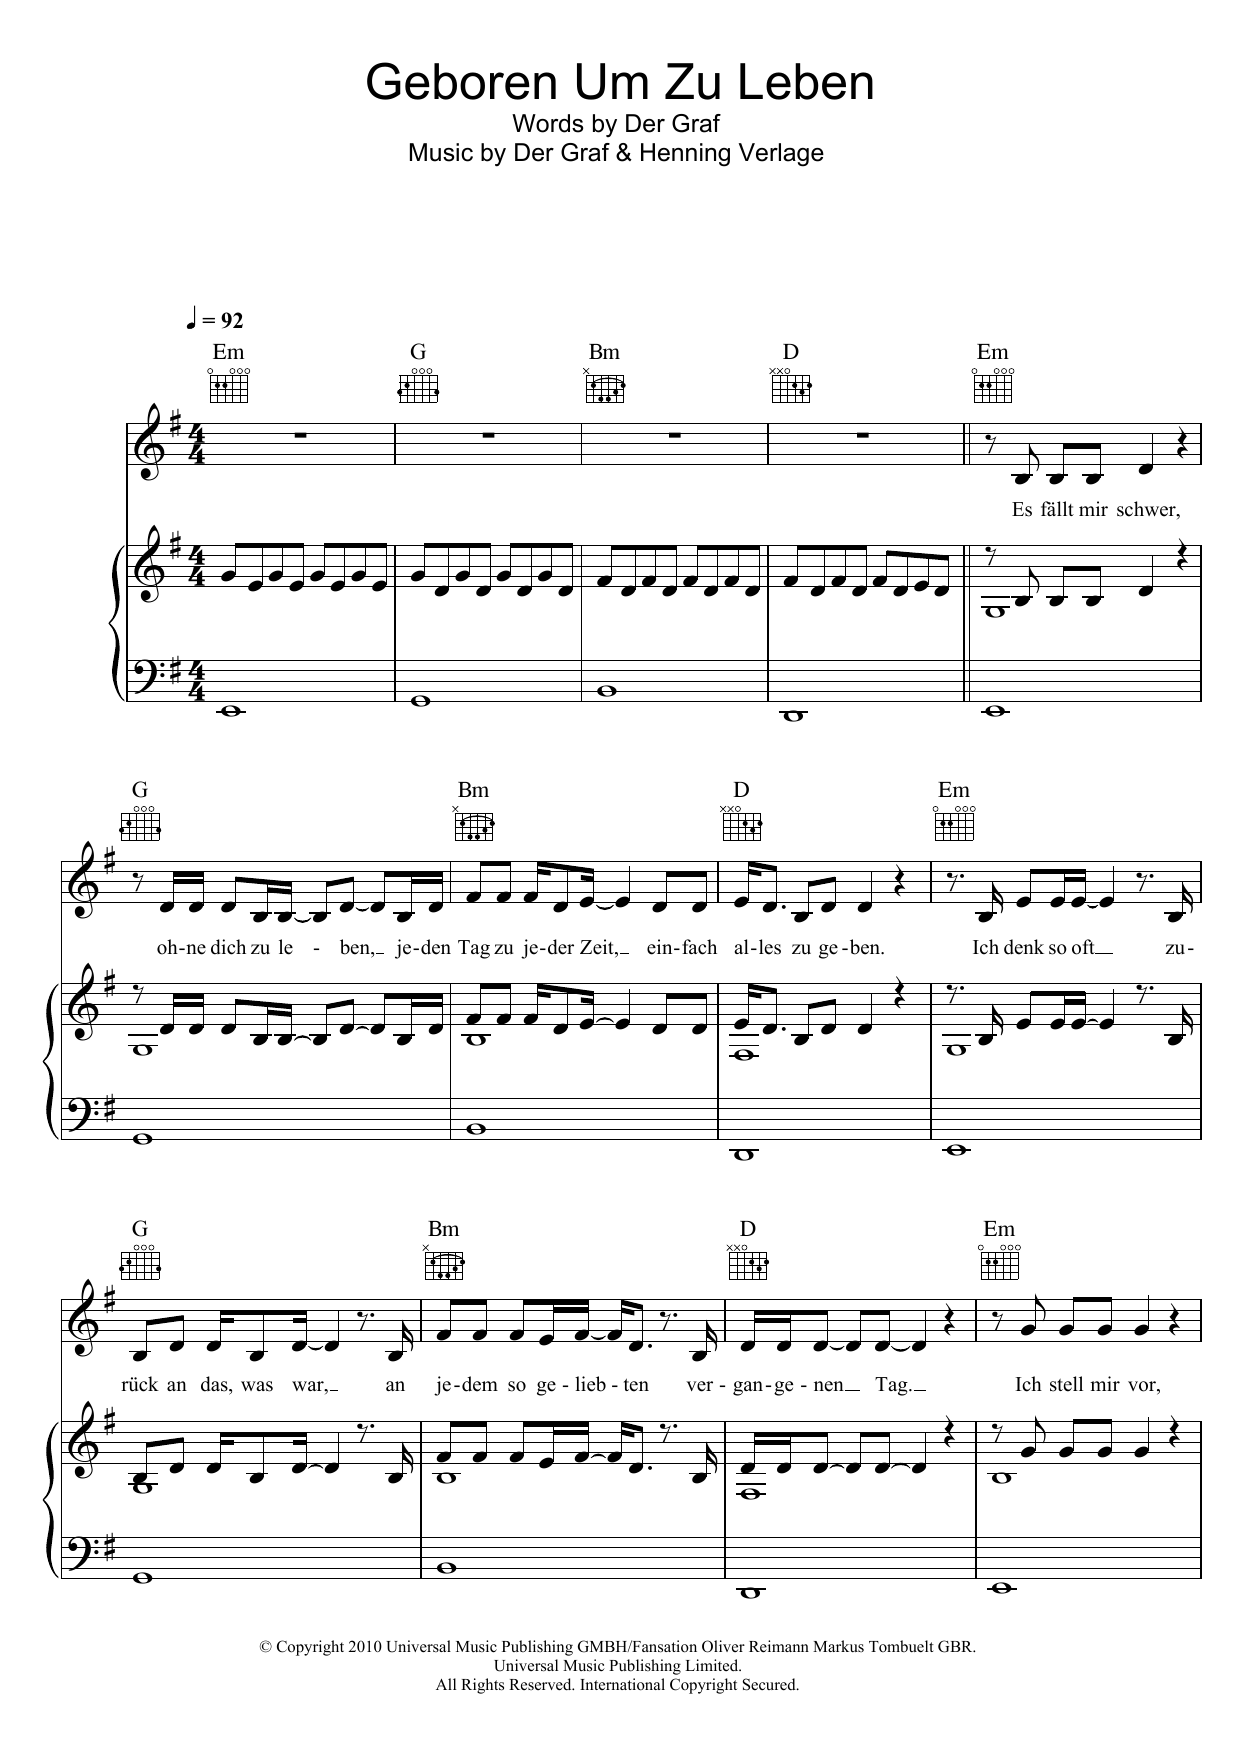 Unheilig Geboren Um Zu Leben Sheet Music Notes & Chords for Piano, Vocal & Guitar (Right-Hand Melody) - Download or Print PDF